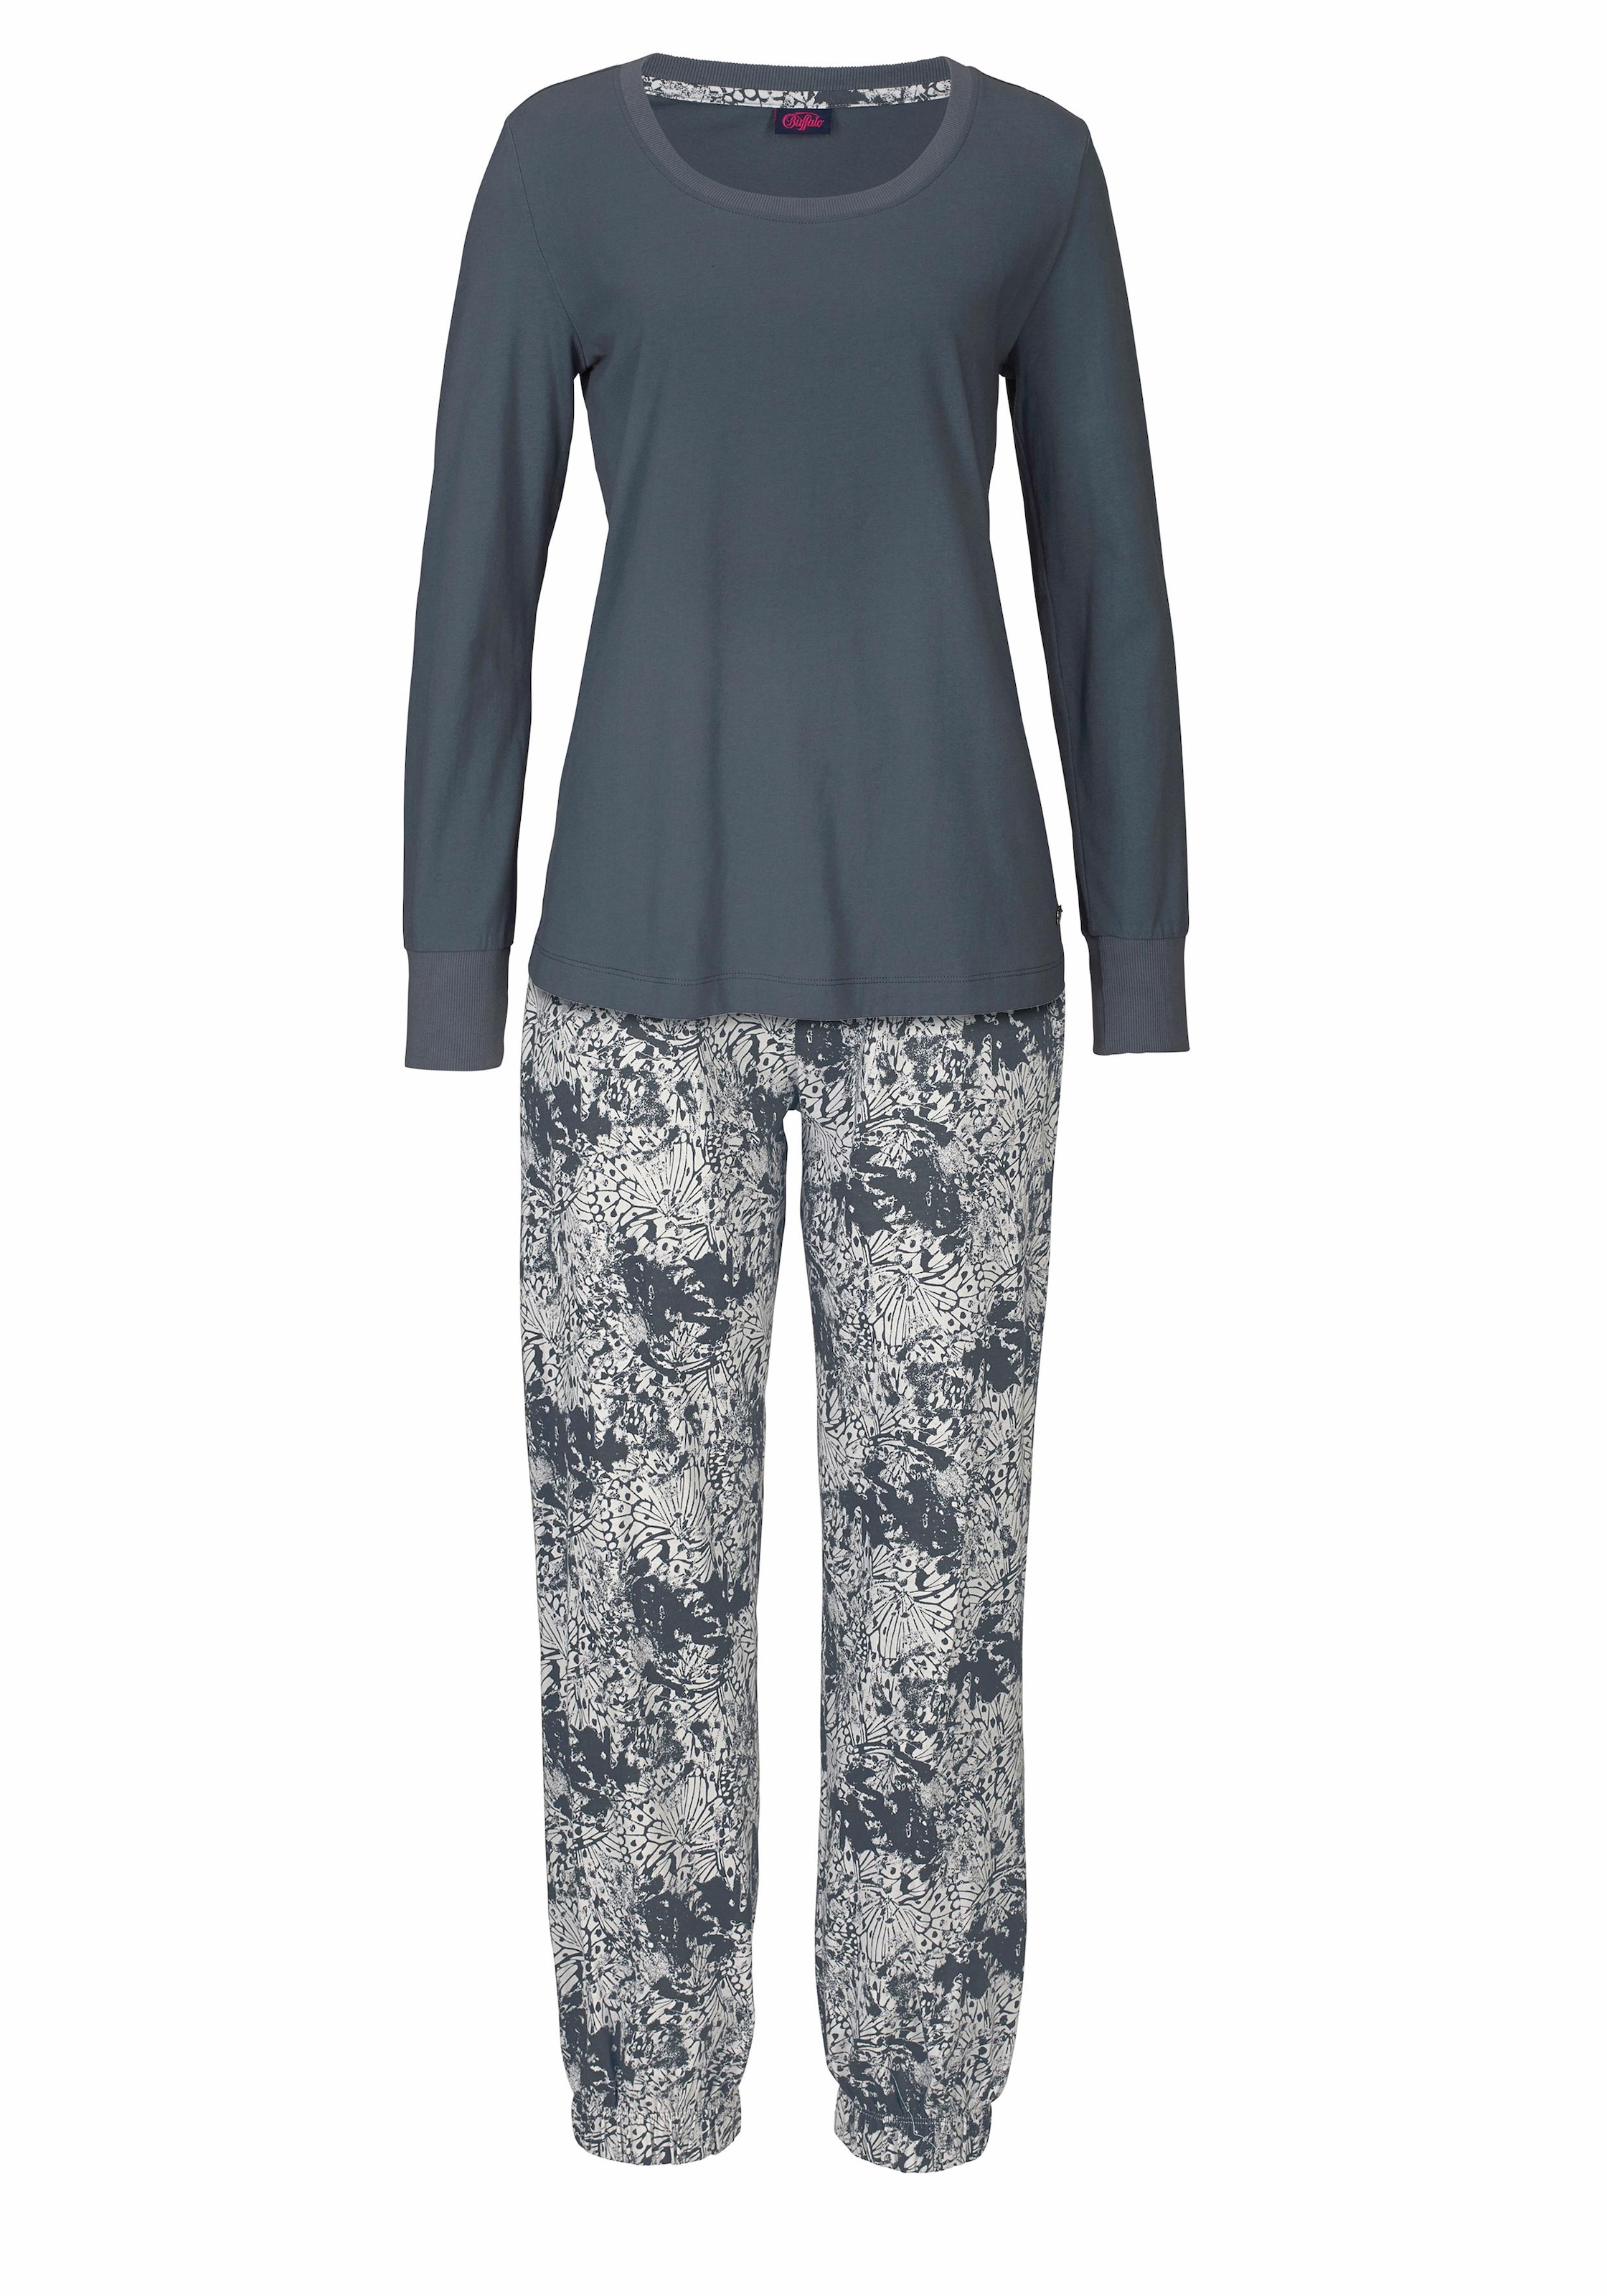 Bestellen bei LASCANA Pyjamas | Pyjamas online Sie